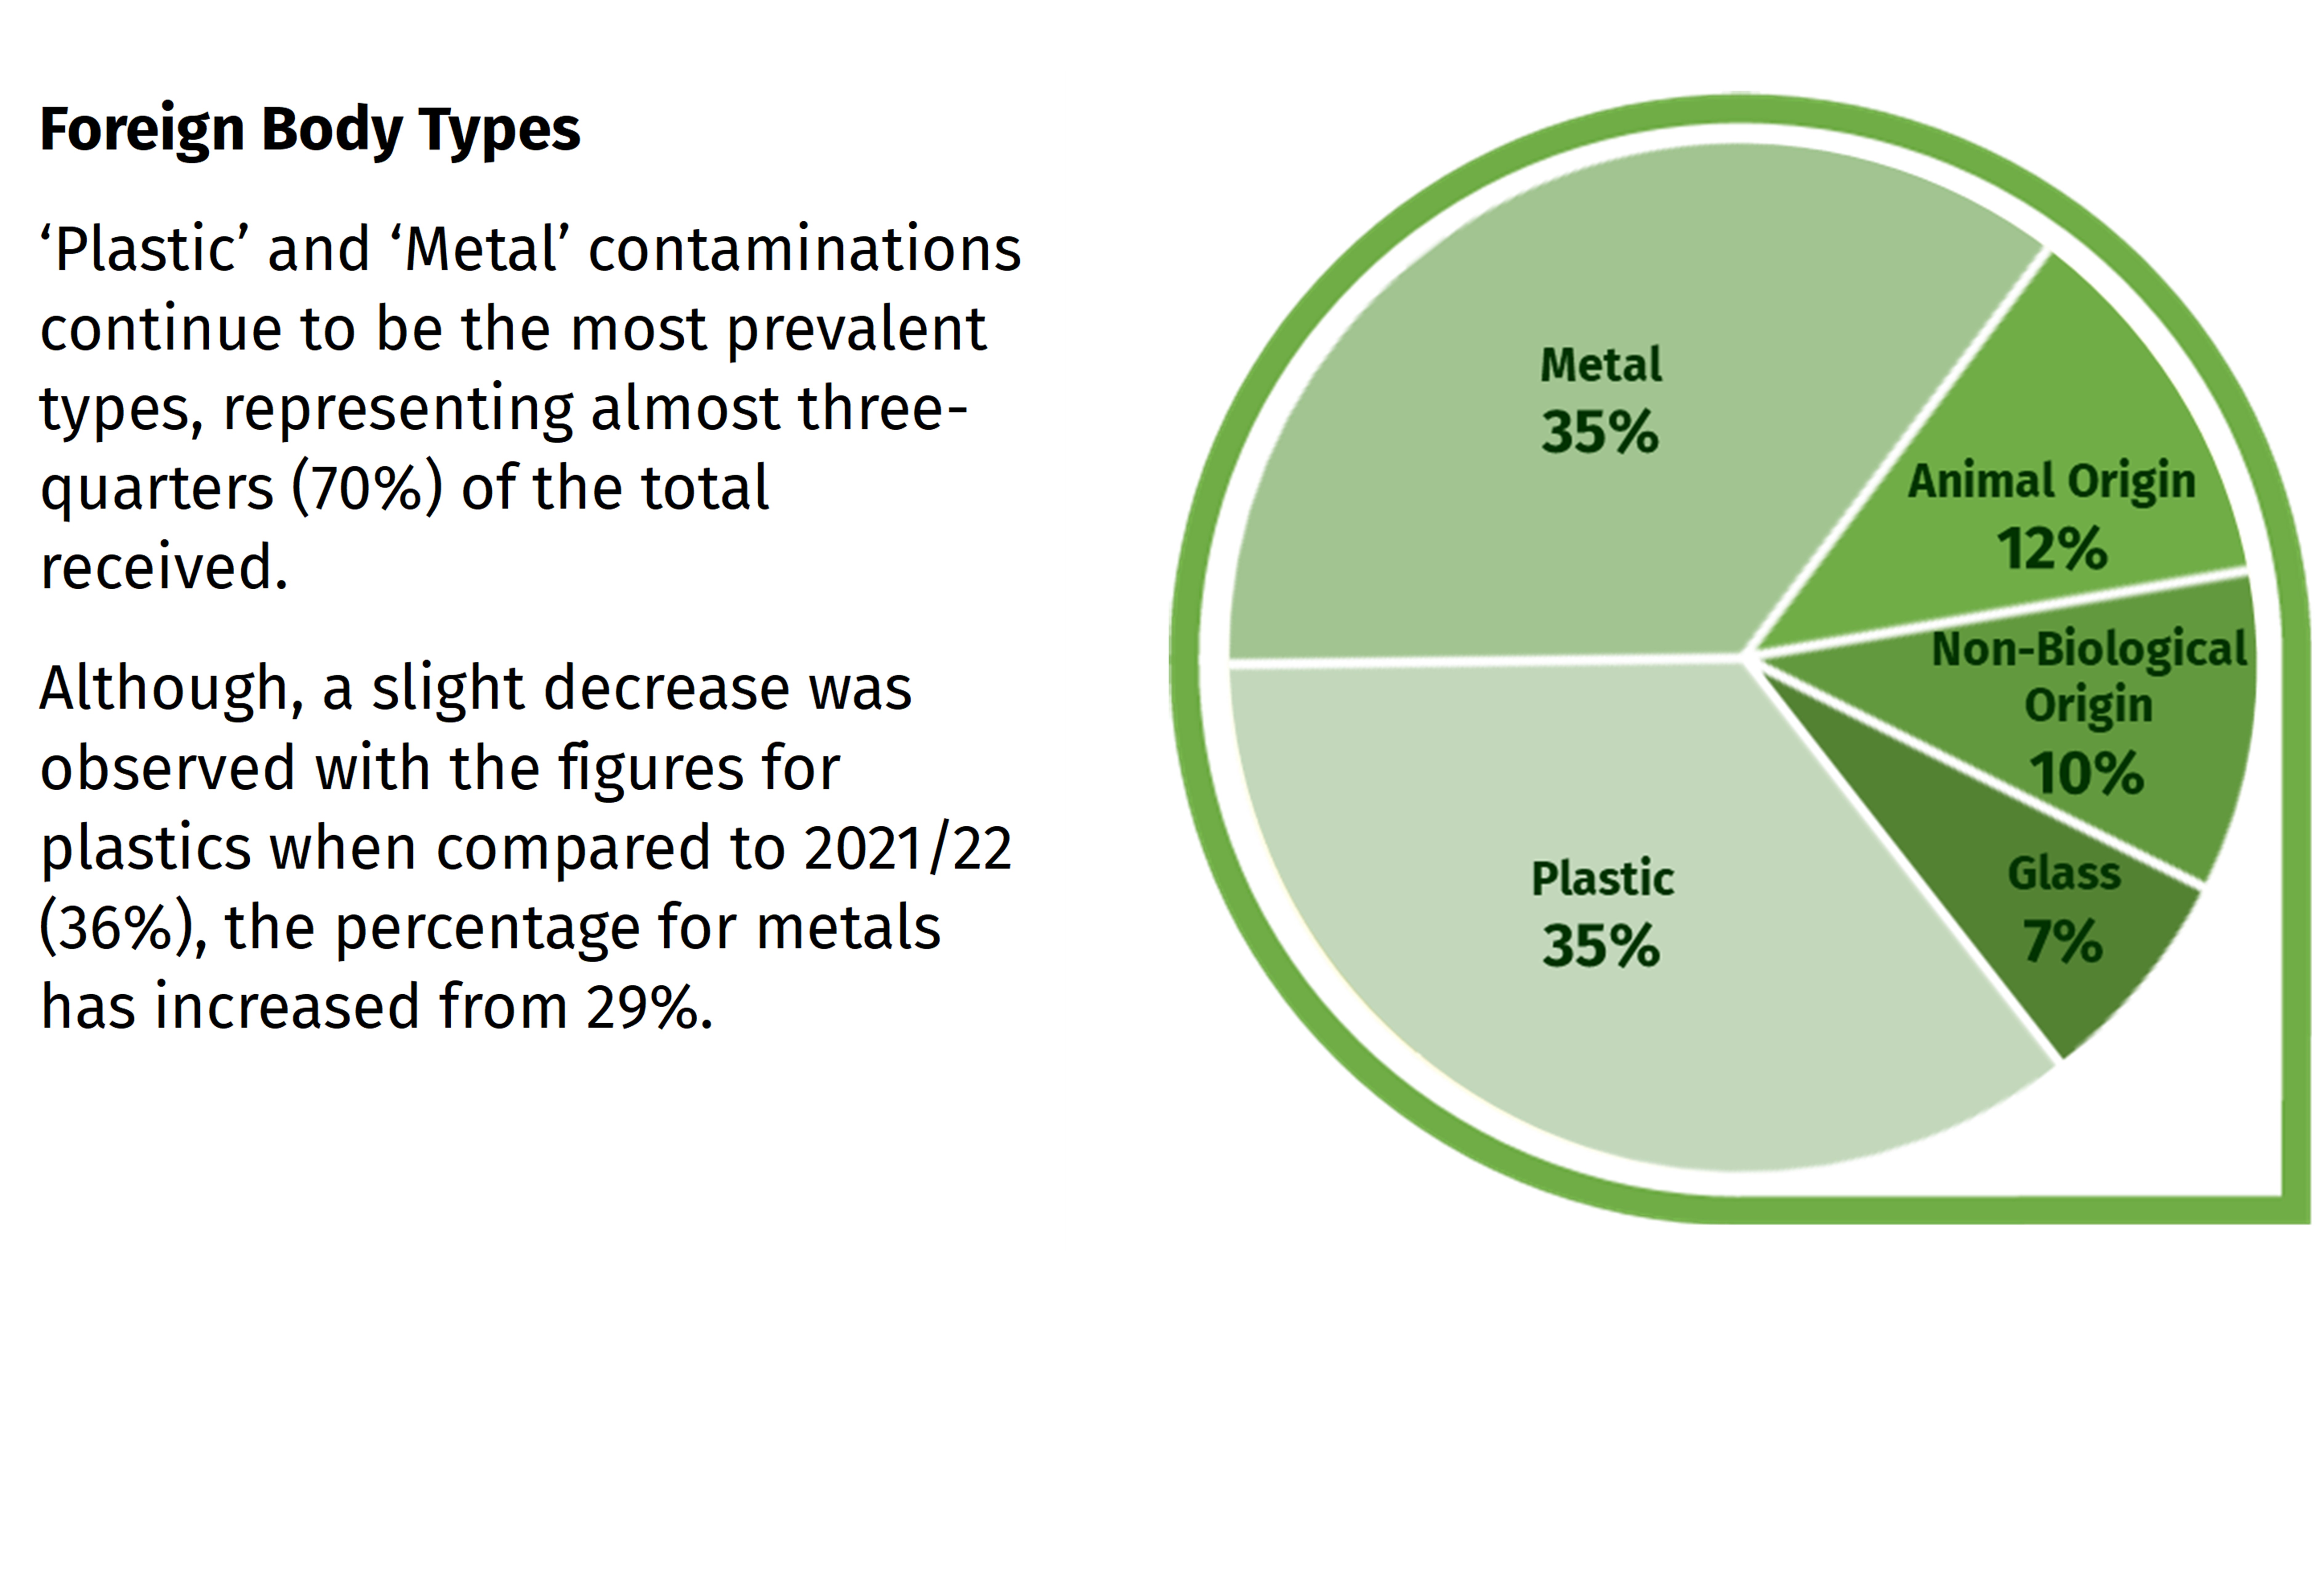 Metal 35%, 35% Plastic, 12% animal origin, 10% non-biological origin, 7% glass. 